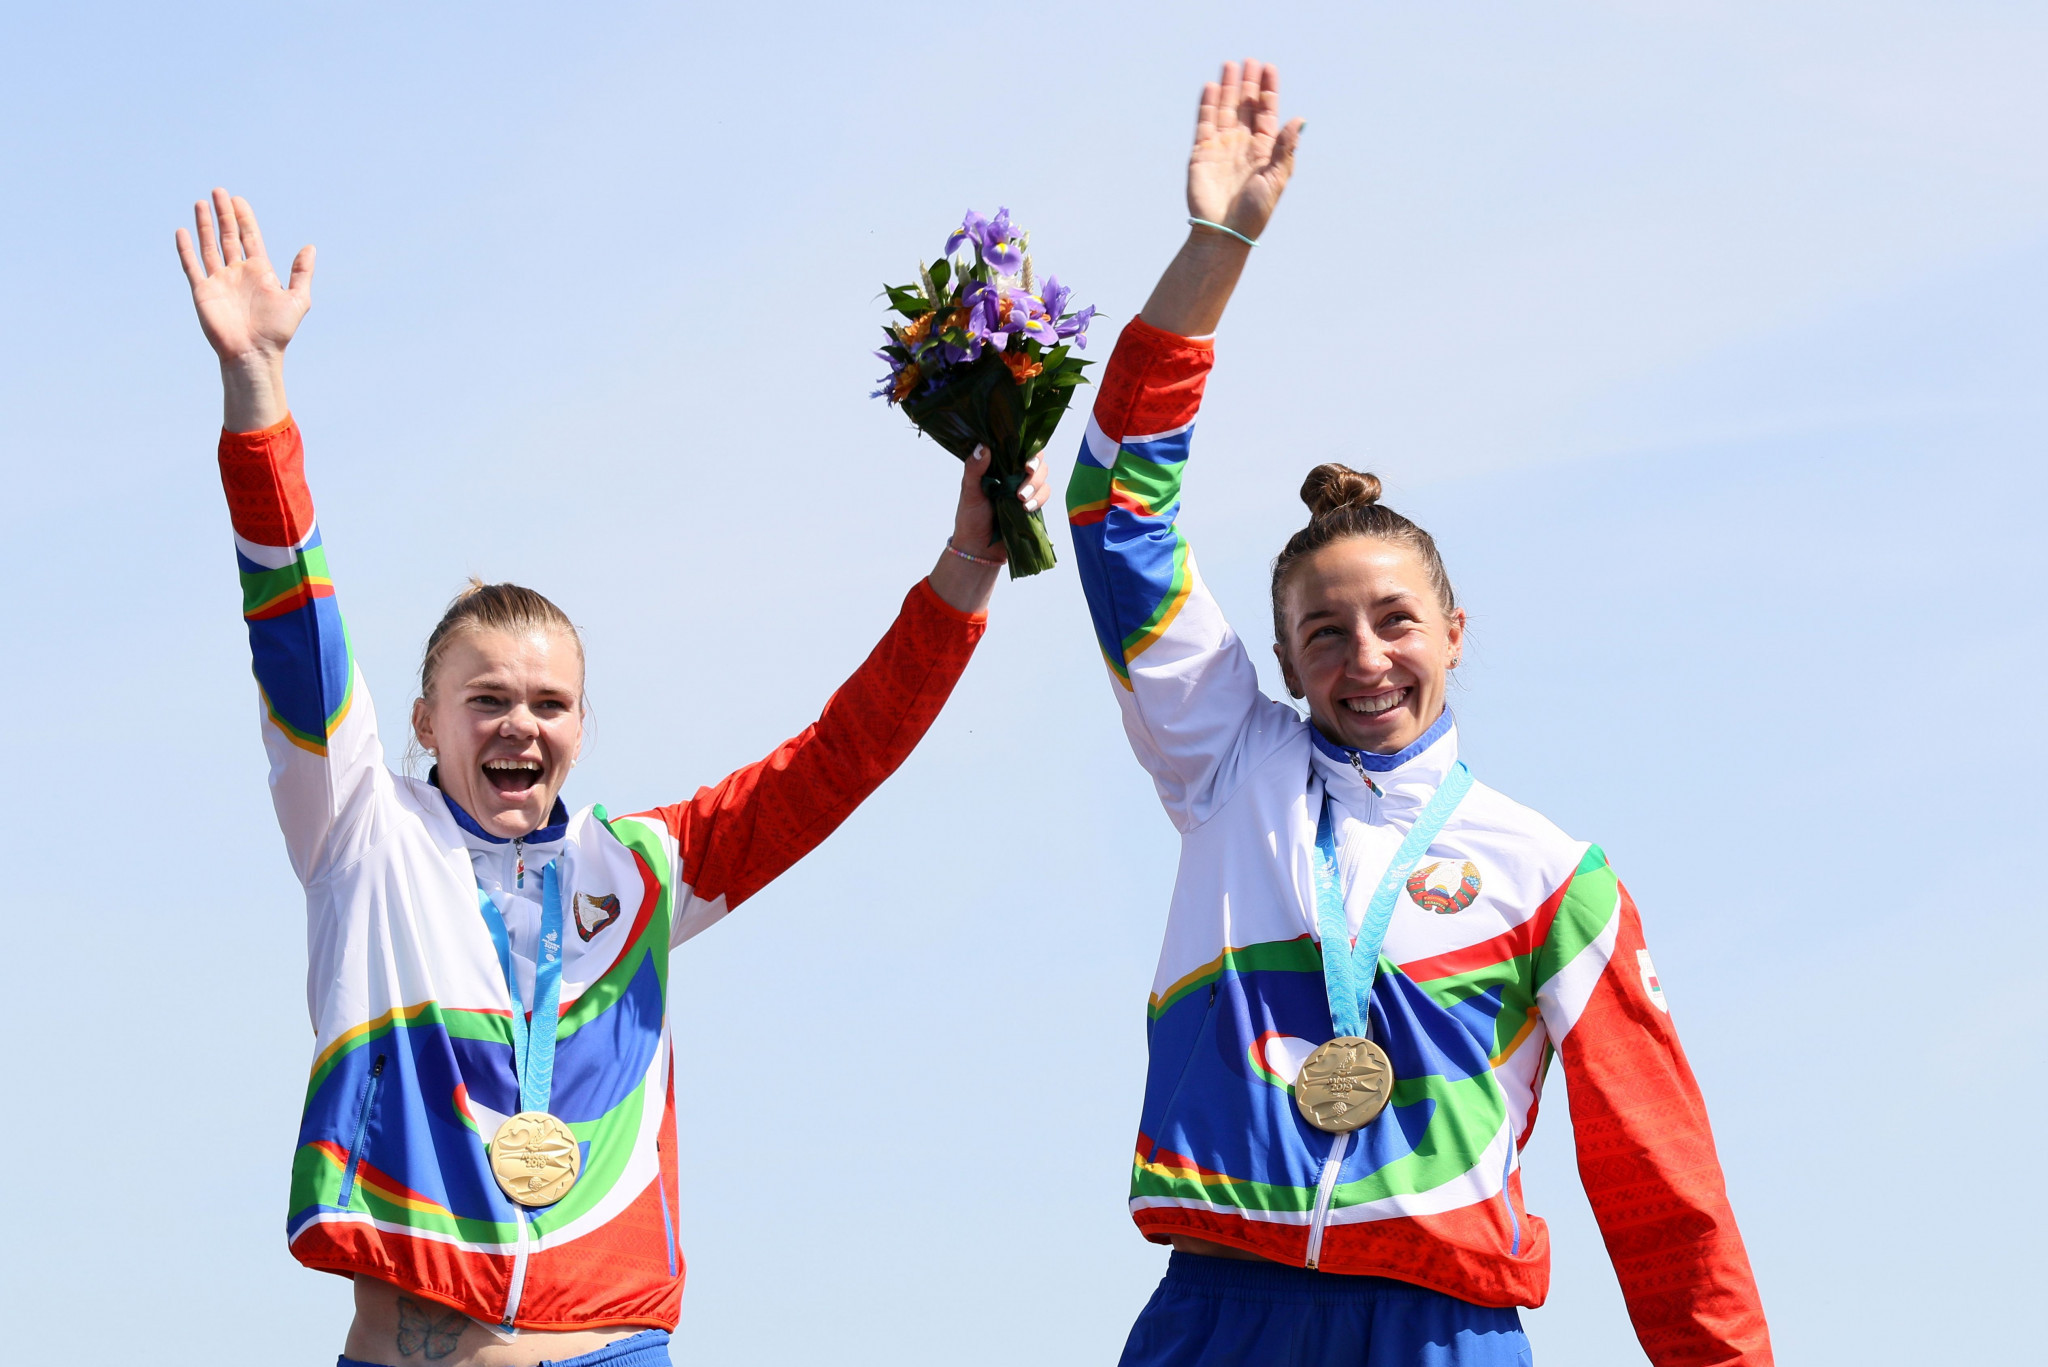  Belarus K2 500m canoe sprint pair beat Hungary’s world champions to gold at Minsk 2019